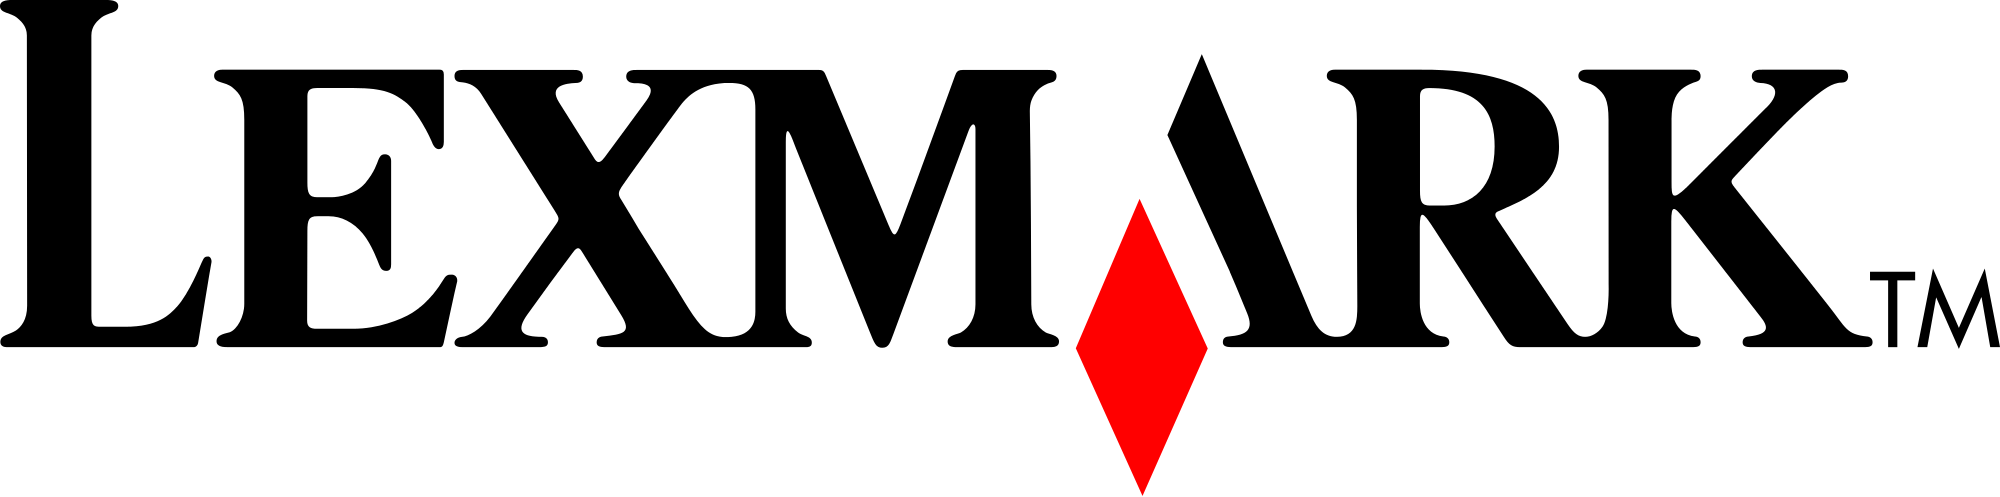 File:Lexmark-primary-logo.svg